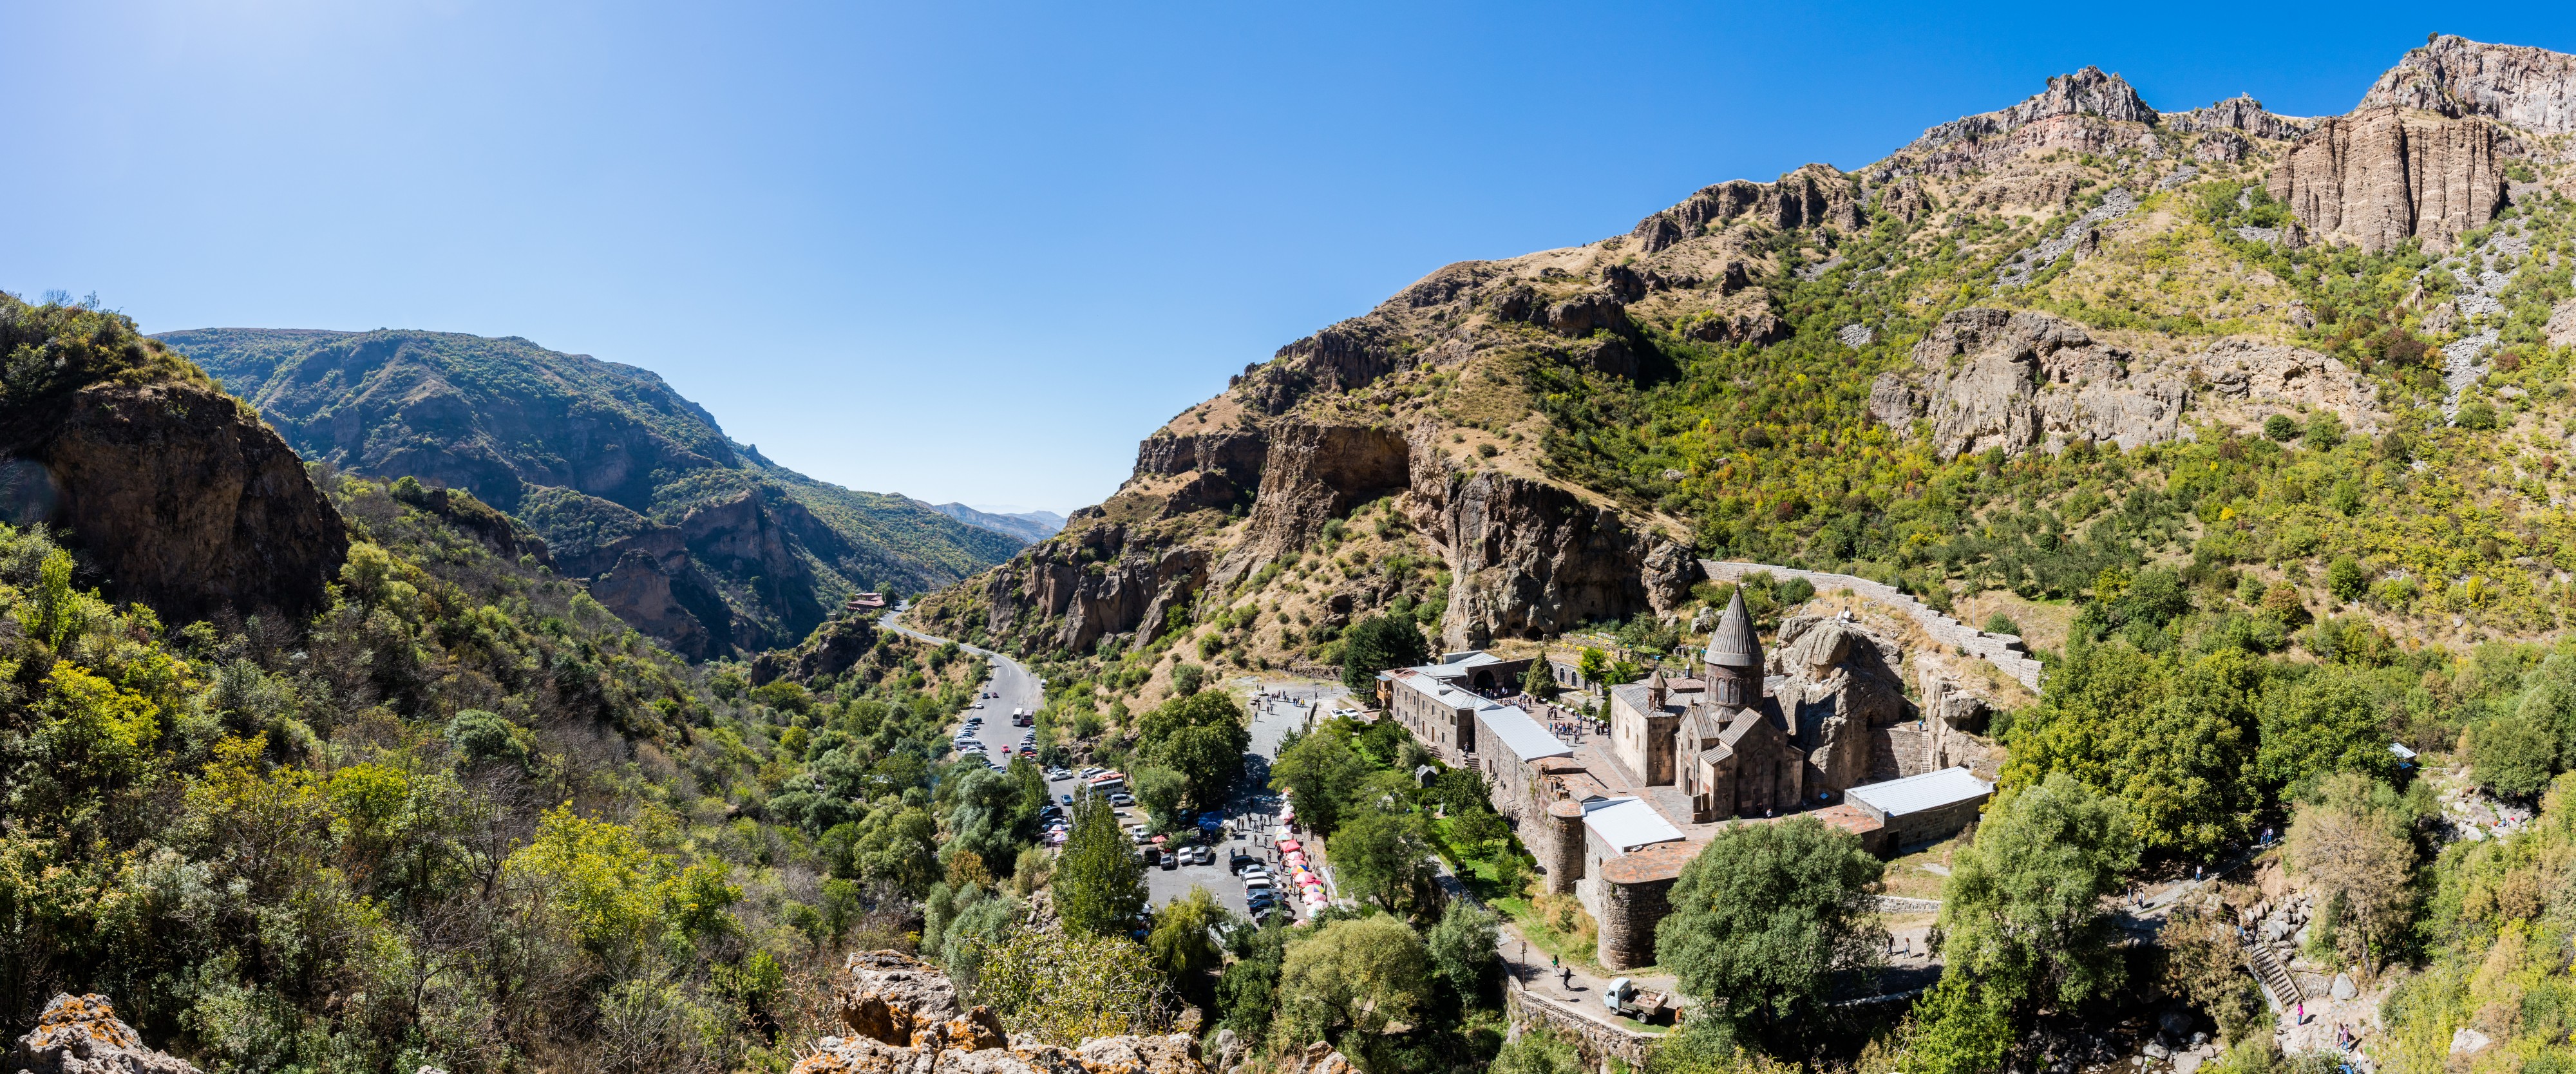 Monasterio de Geghard, Armenia, 2016-10-02, DD 59-62 PAN